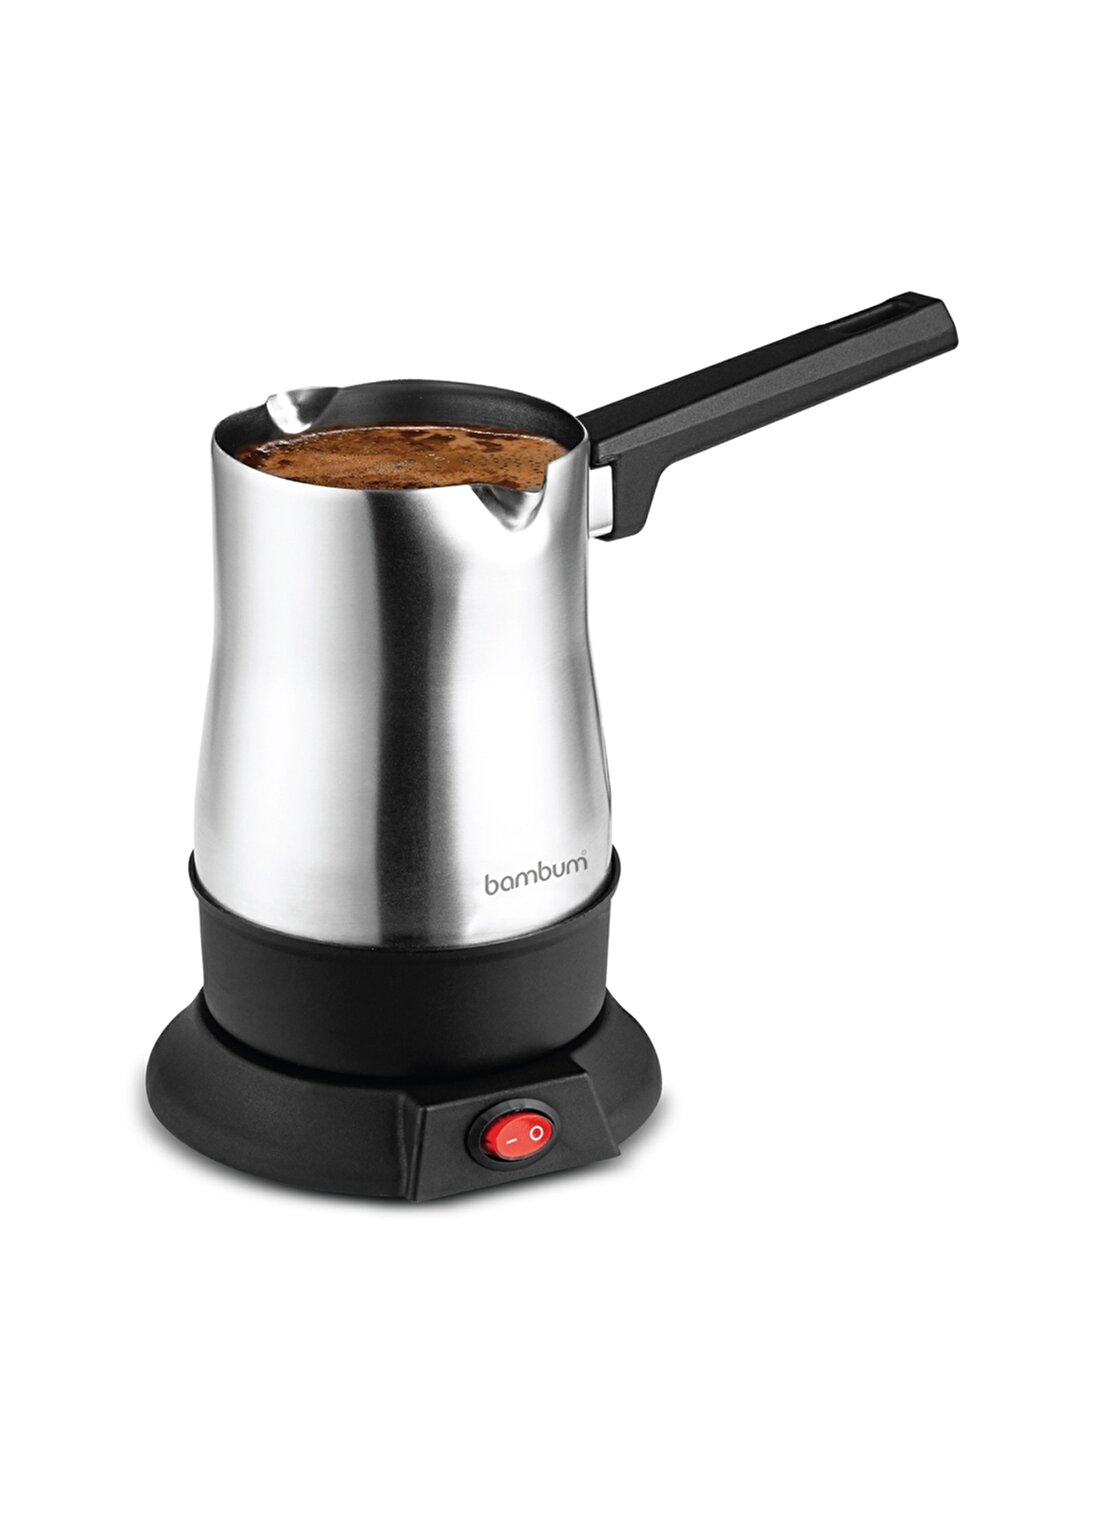 Bambum Fastcoffee Türk Kahve Makinesi Inox